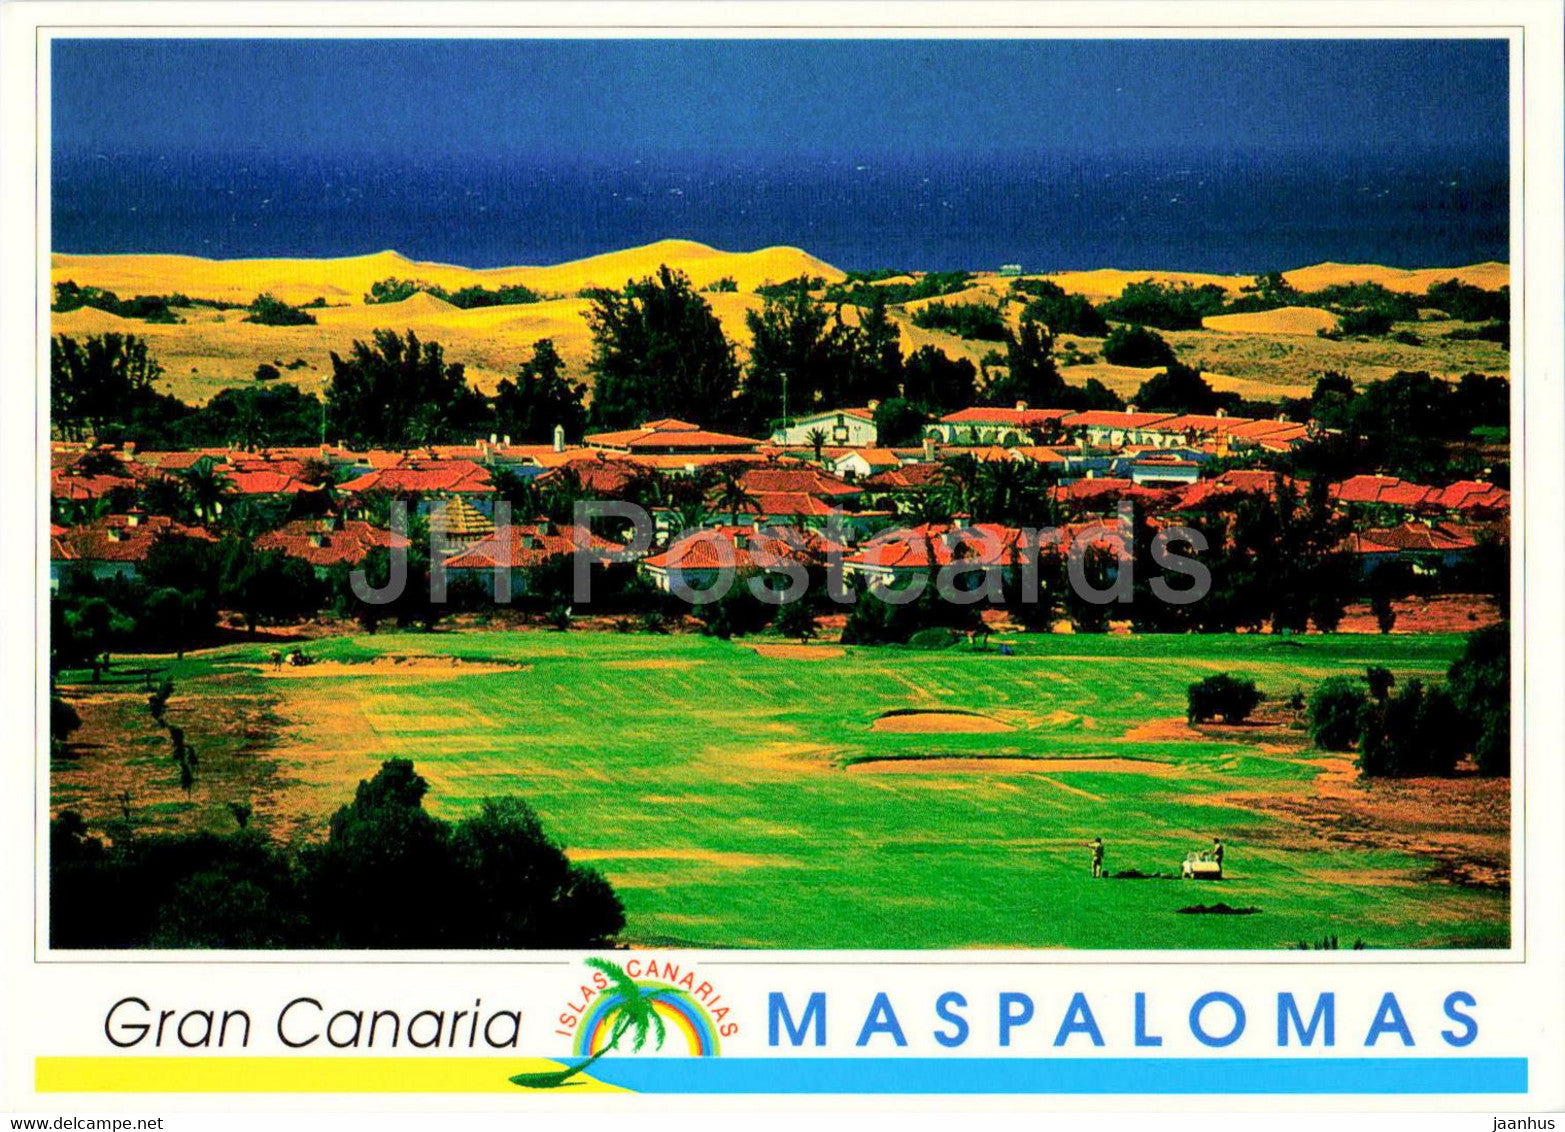 Maspalomas - Gran Canaria - Spain - unused - JH Postcards